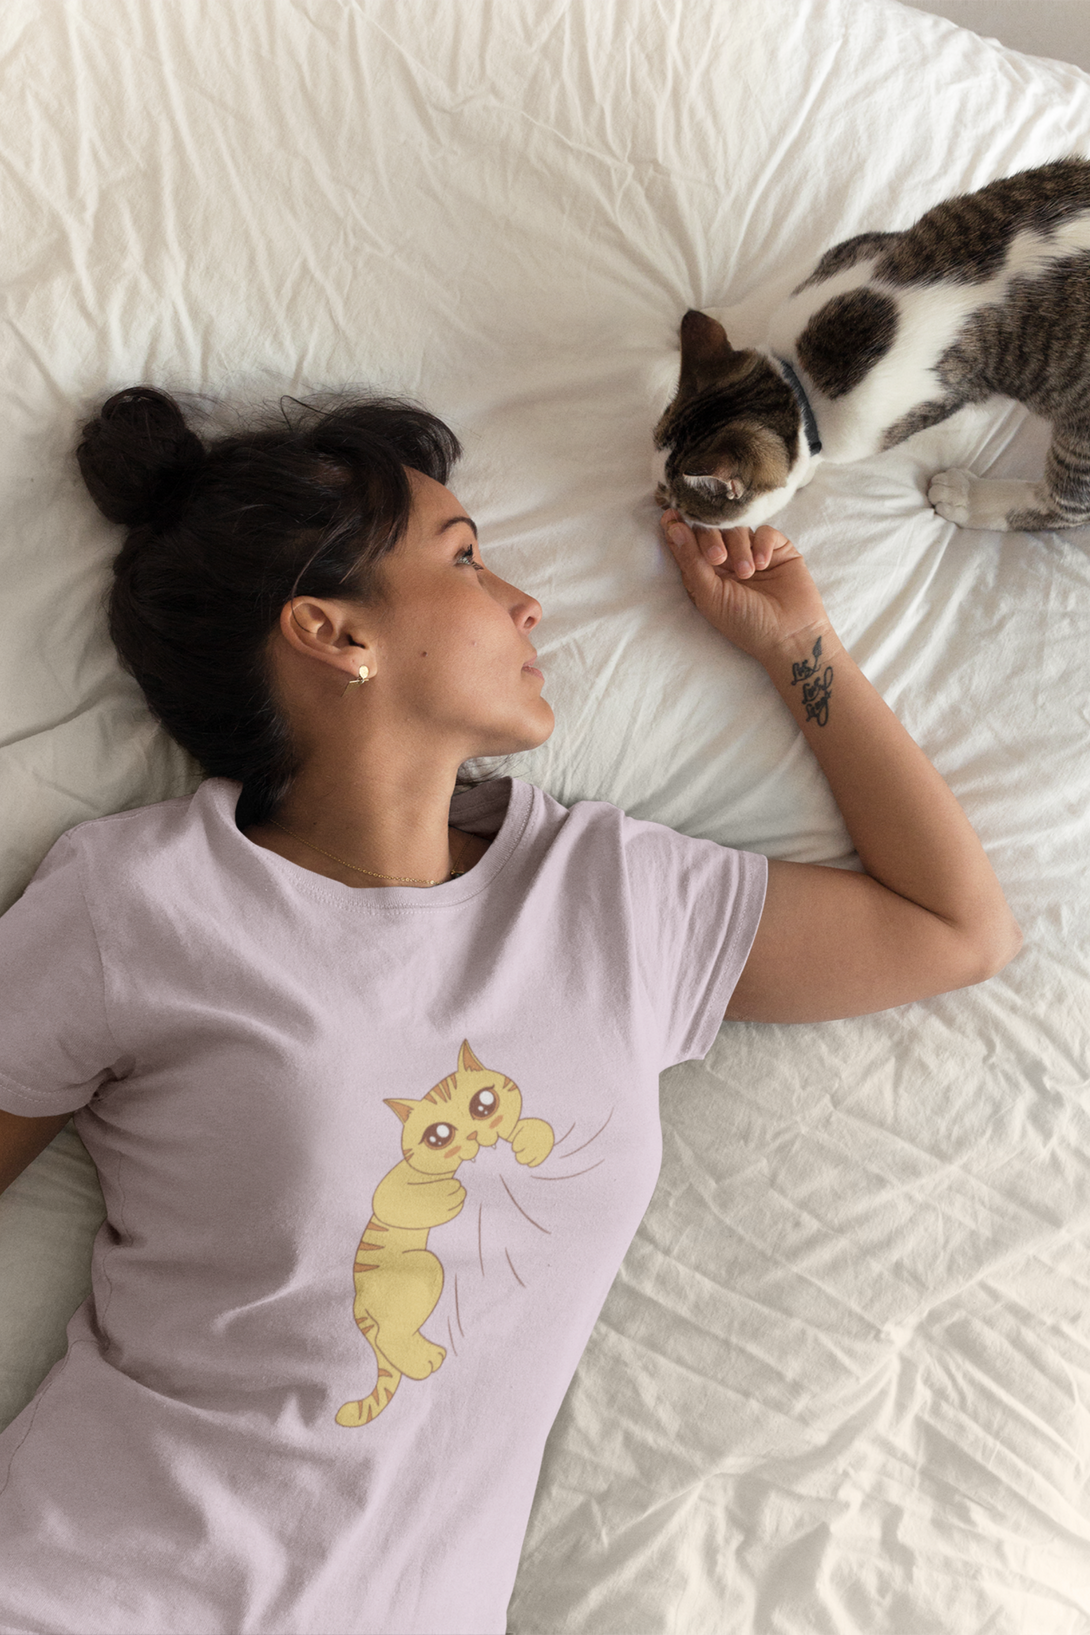 Cat Biting Printed T-Shirt For Women - WowWaves - 2